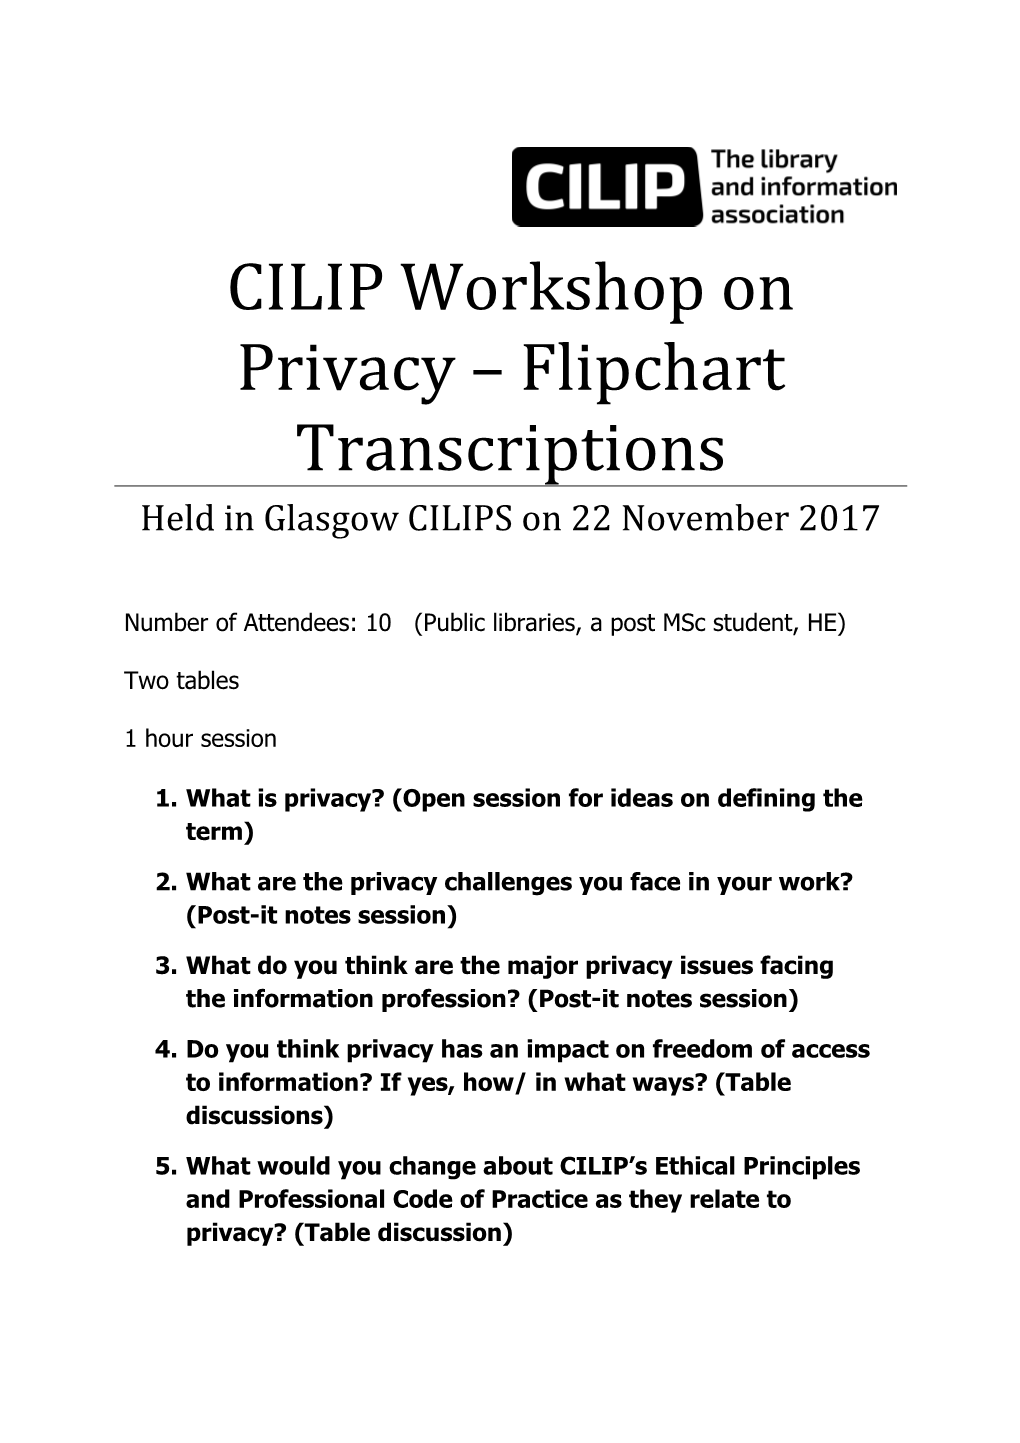 CILIP Workshop on Privacy Flipchart Transcriptions